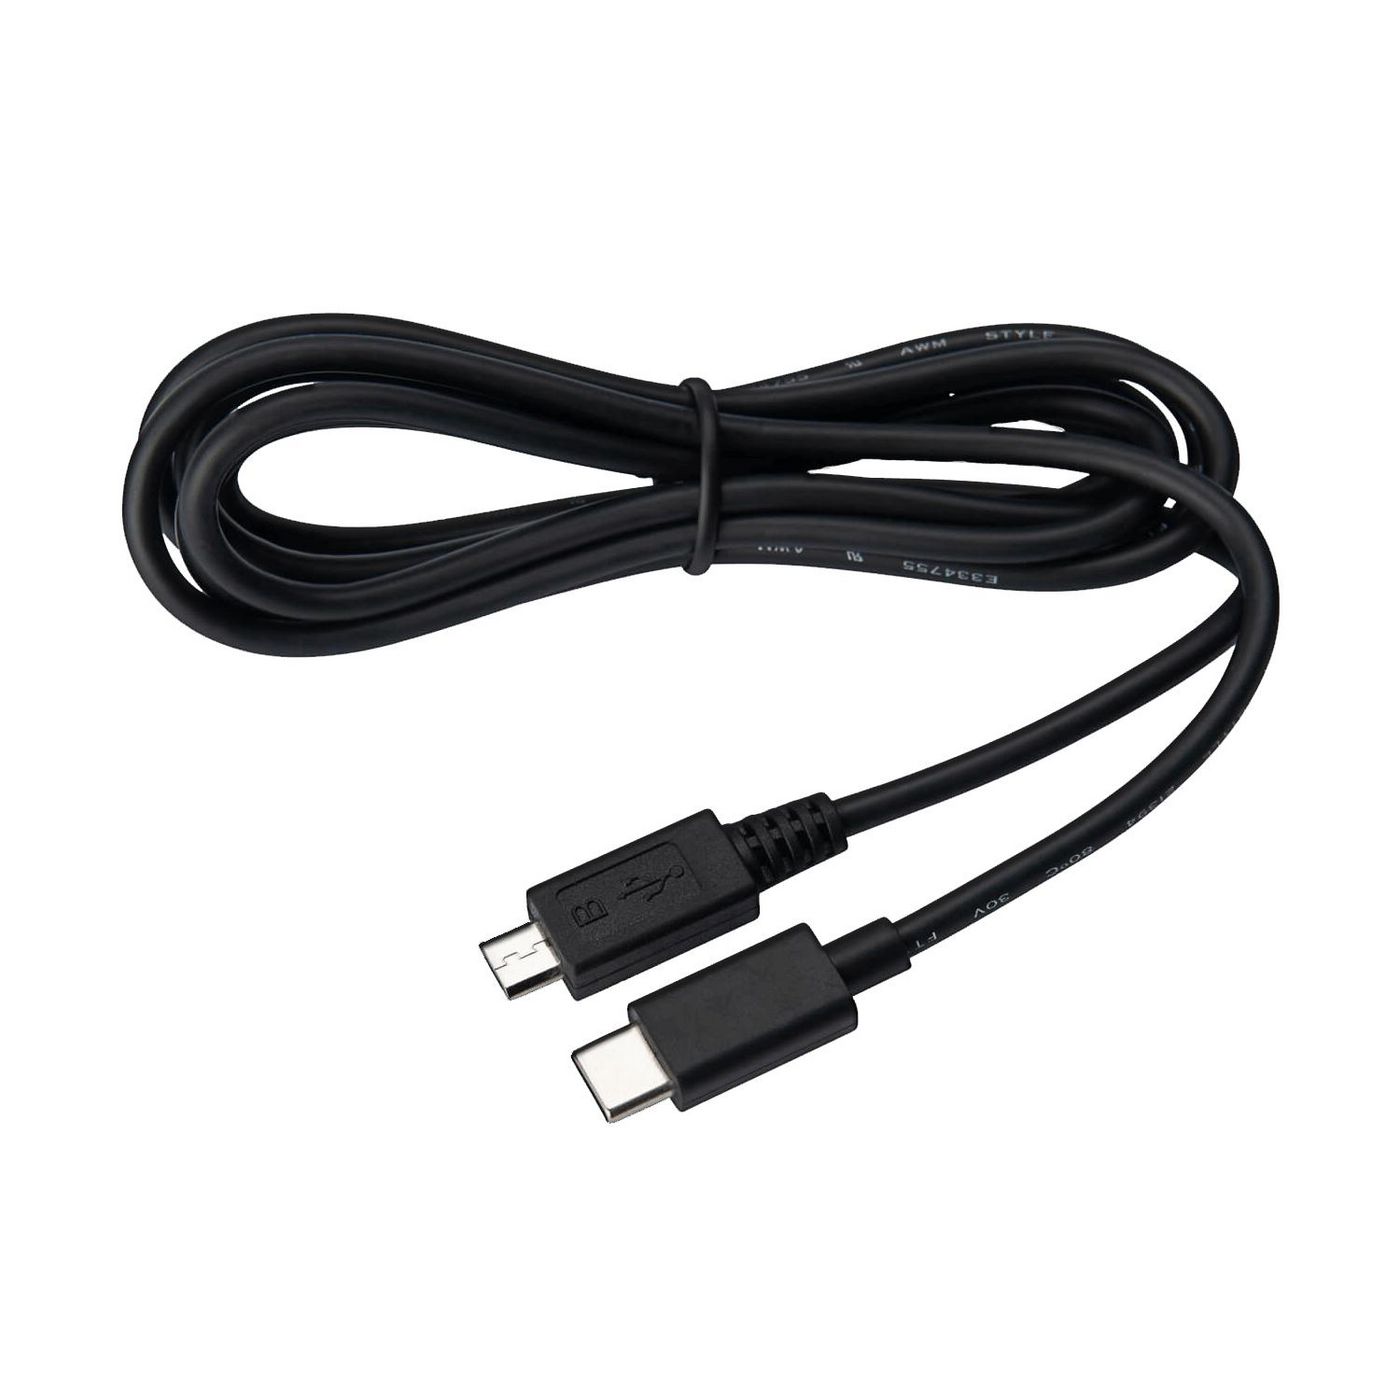 Jabra 14208-28 W125767636 USB Cable, BLK, USB-C to 